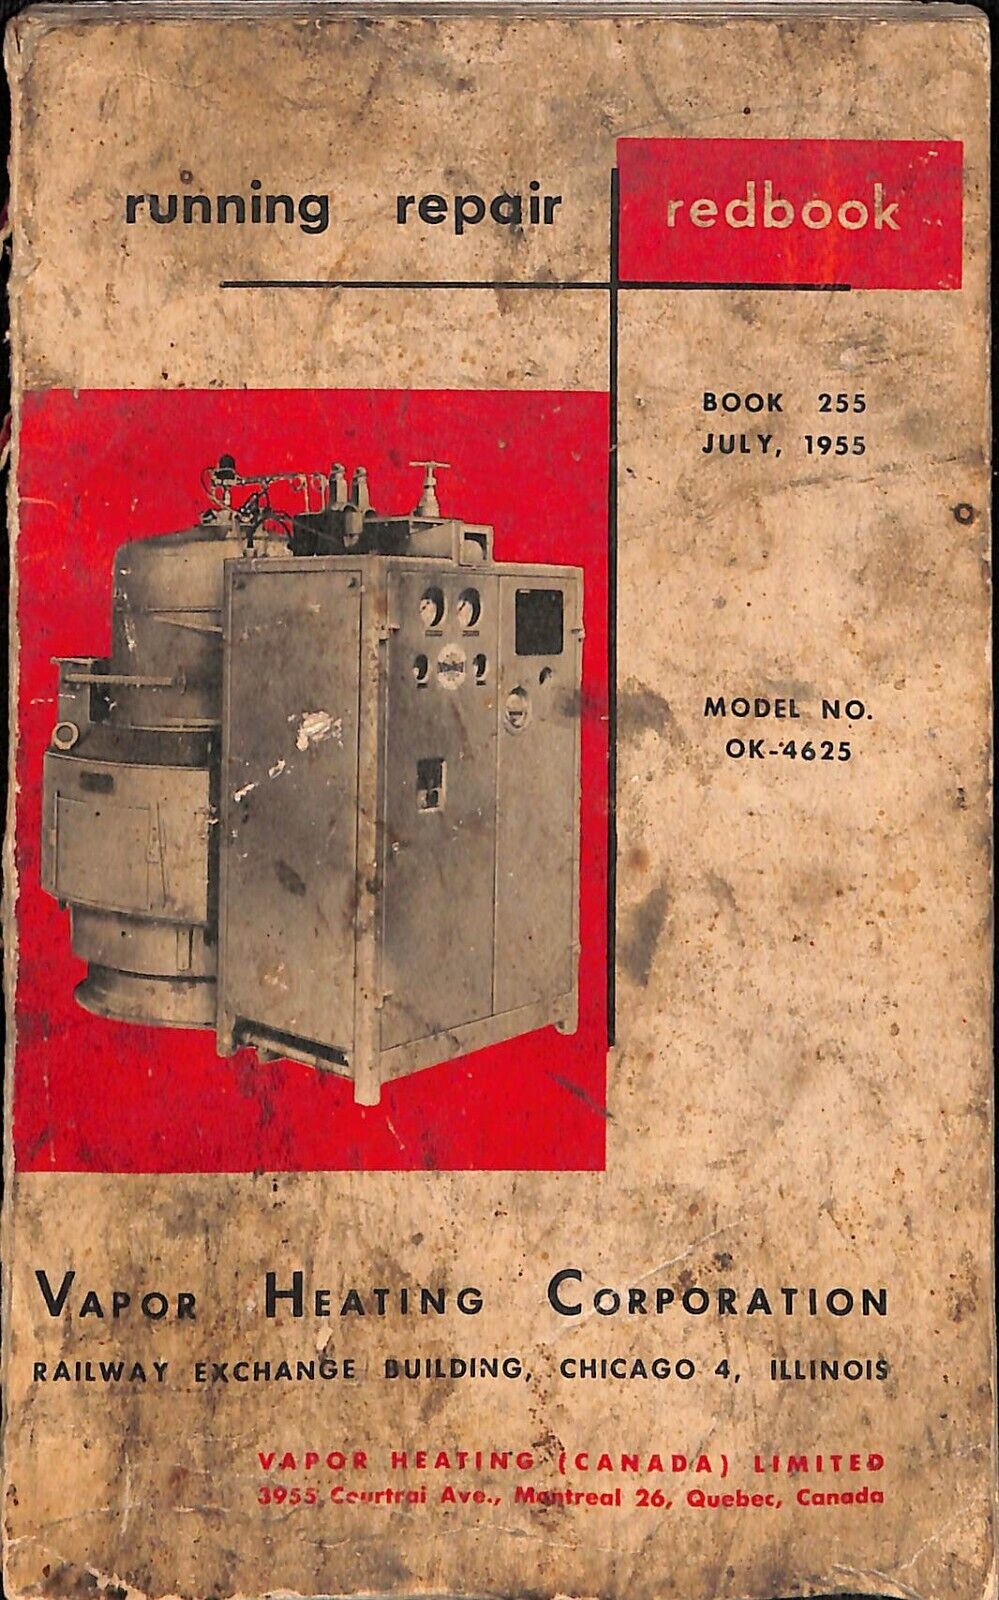 1955 Vapor Heating Corp Clarkson Steam Generator OK 4625 Repair Redbook CPB1